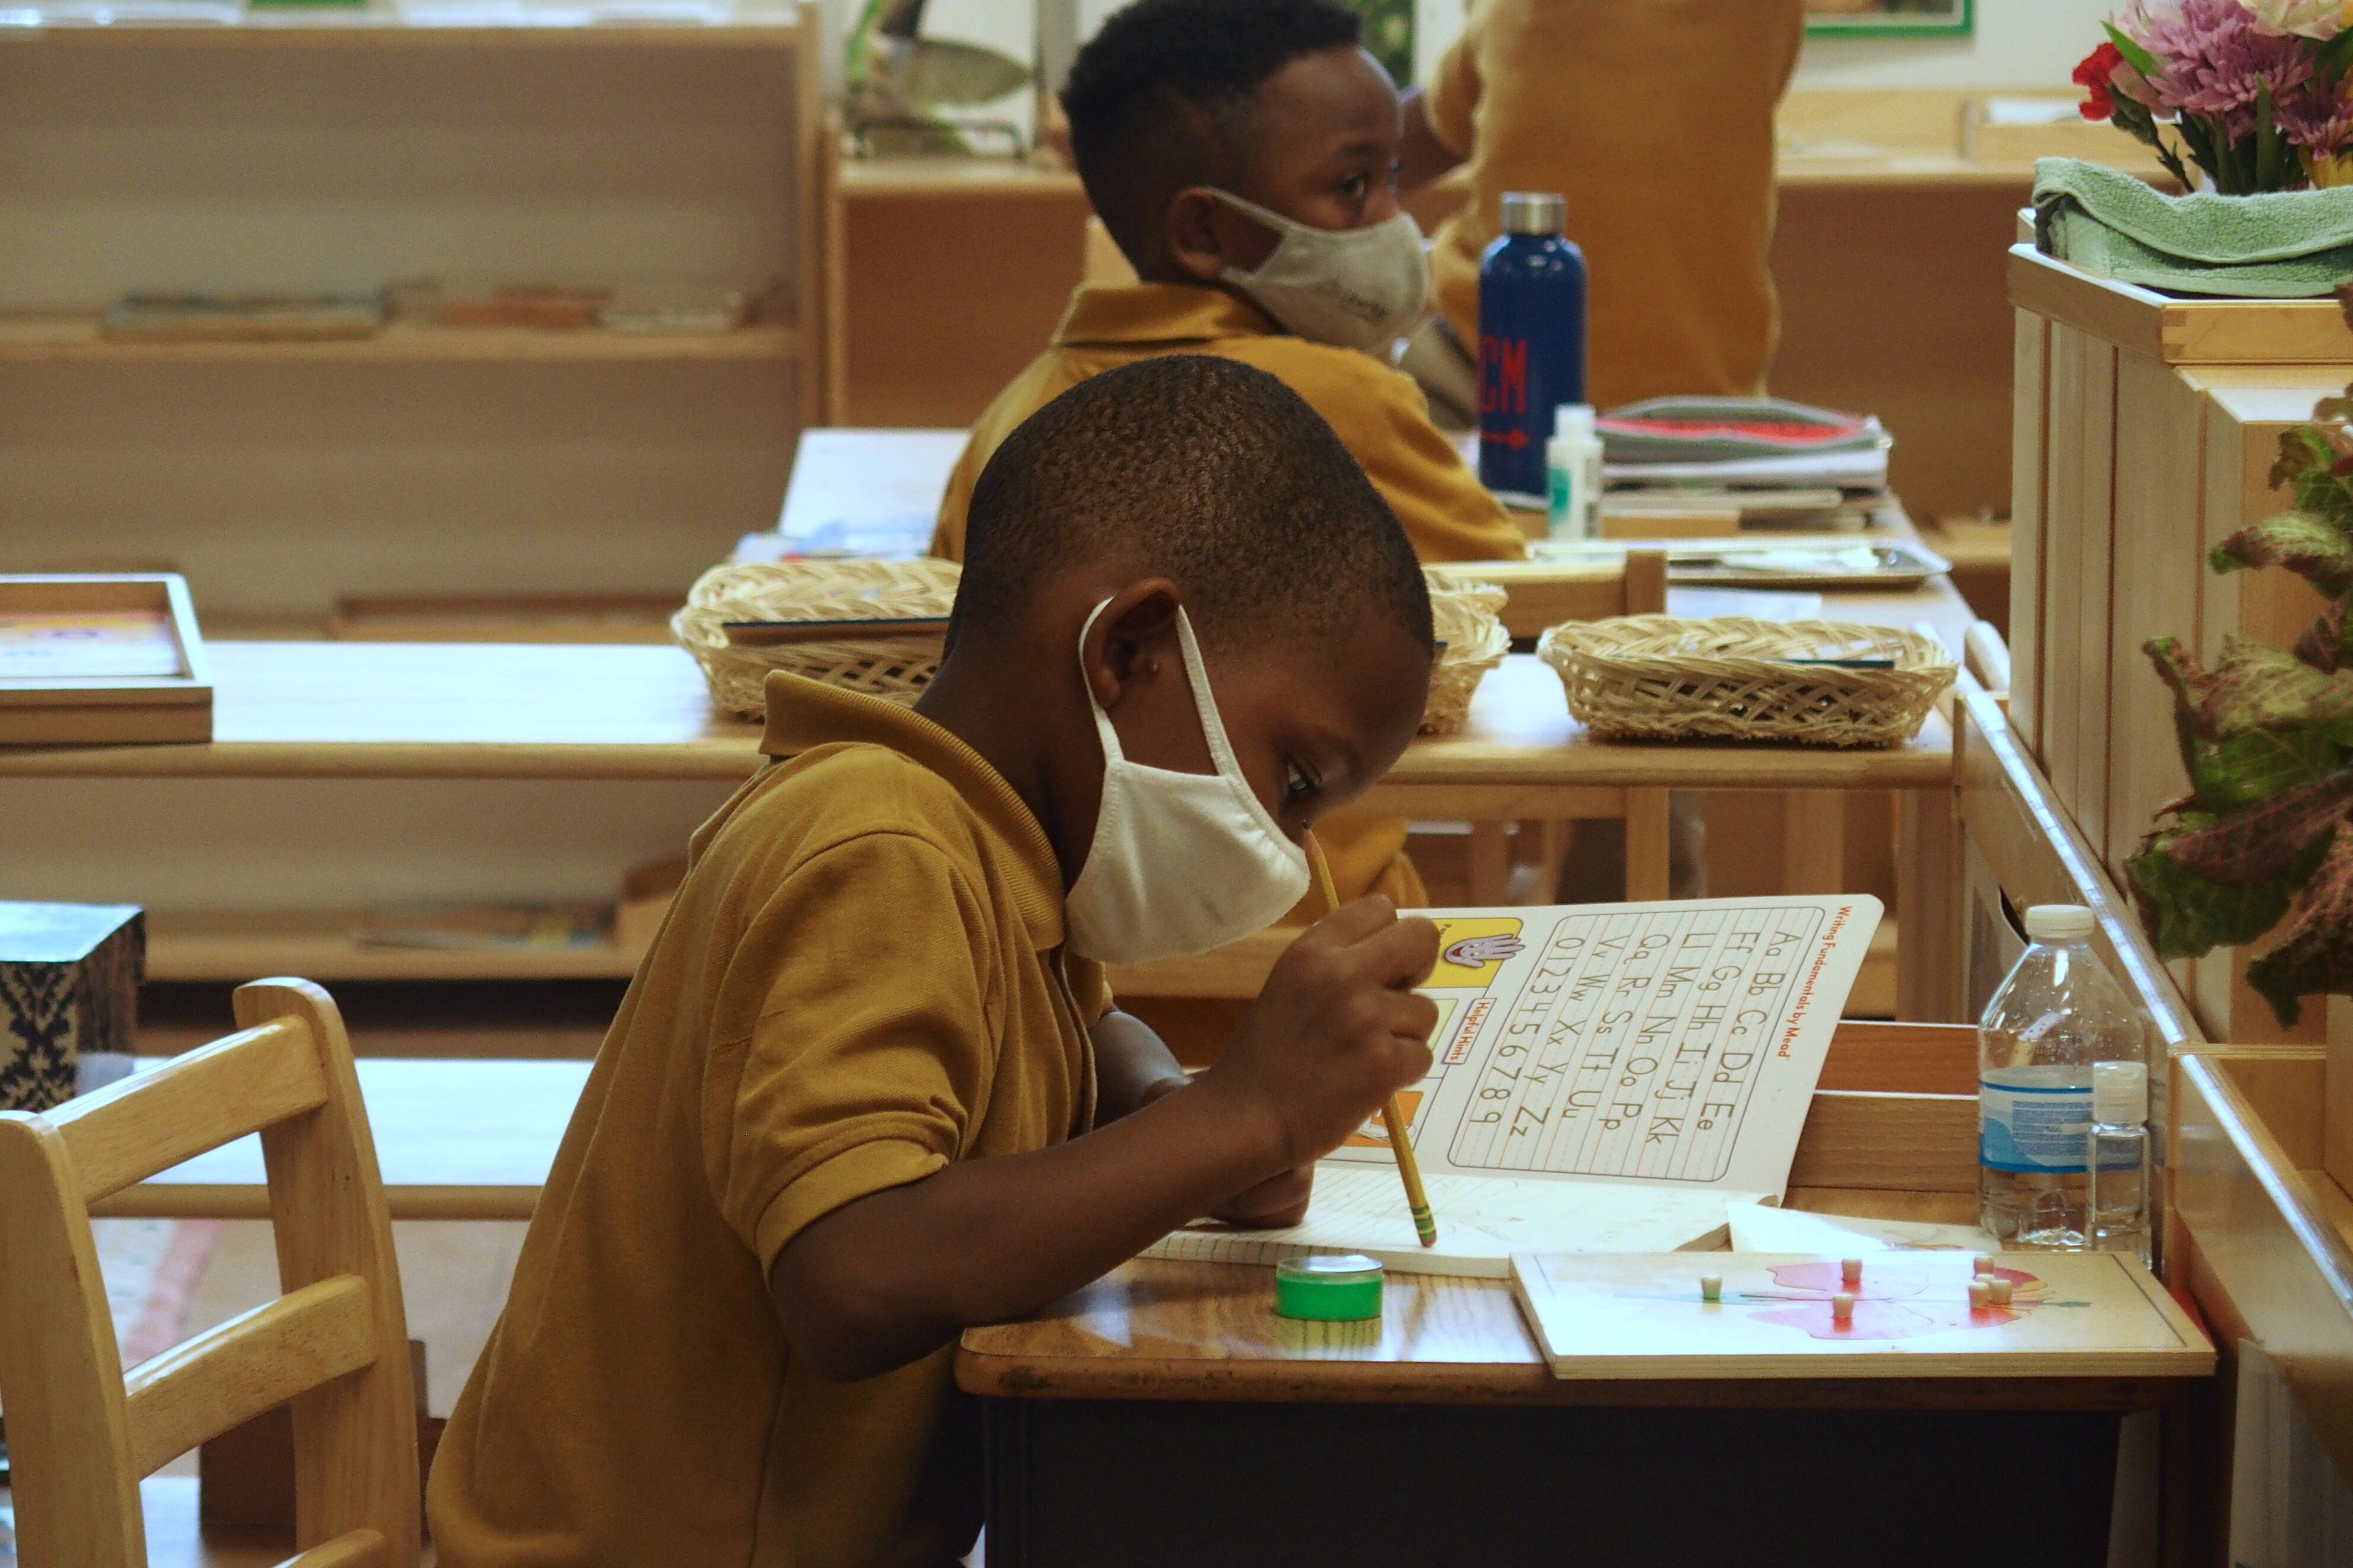 Elementary school students in masks work at their desks